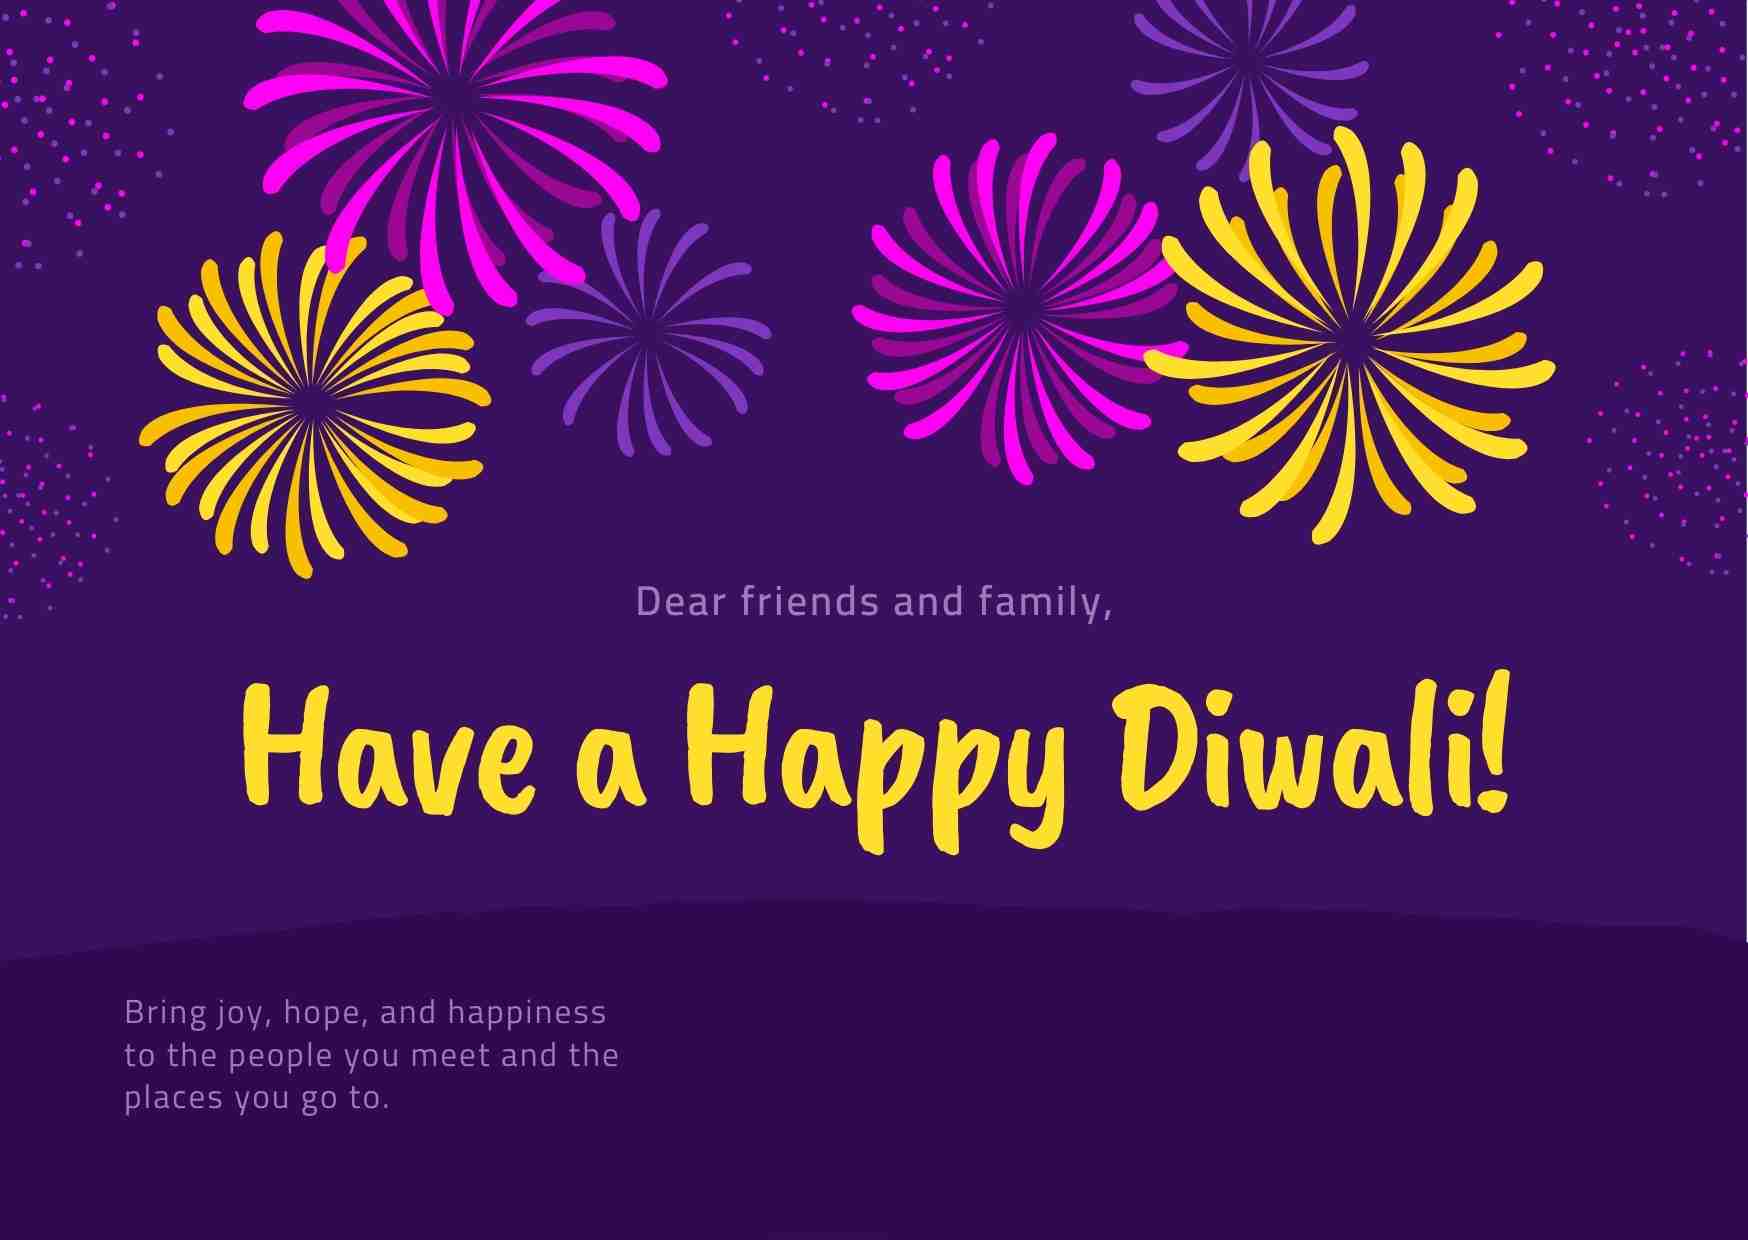 purple-orange-and-yellow-fireworks-diwali-greeting-card.jpg